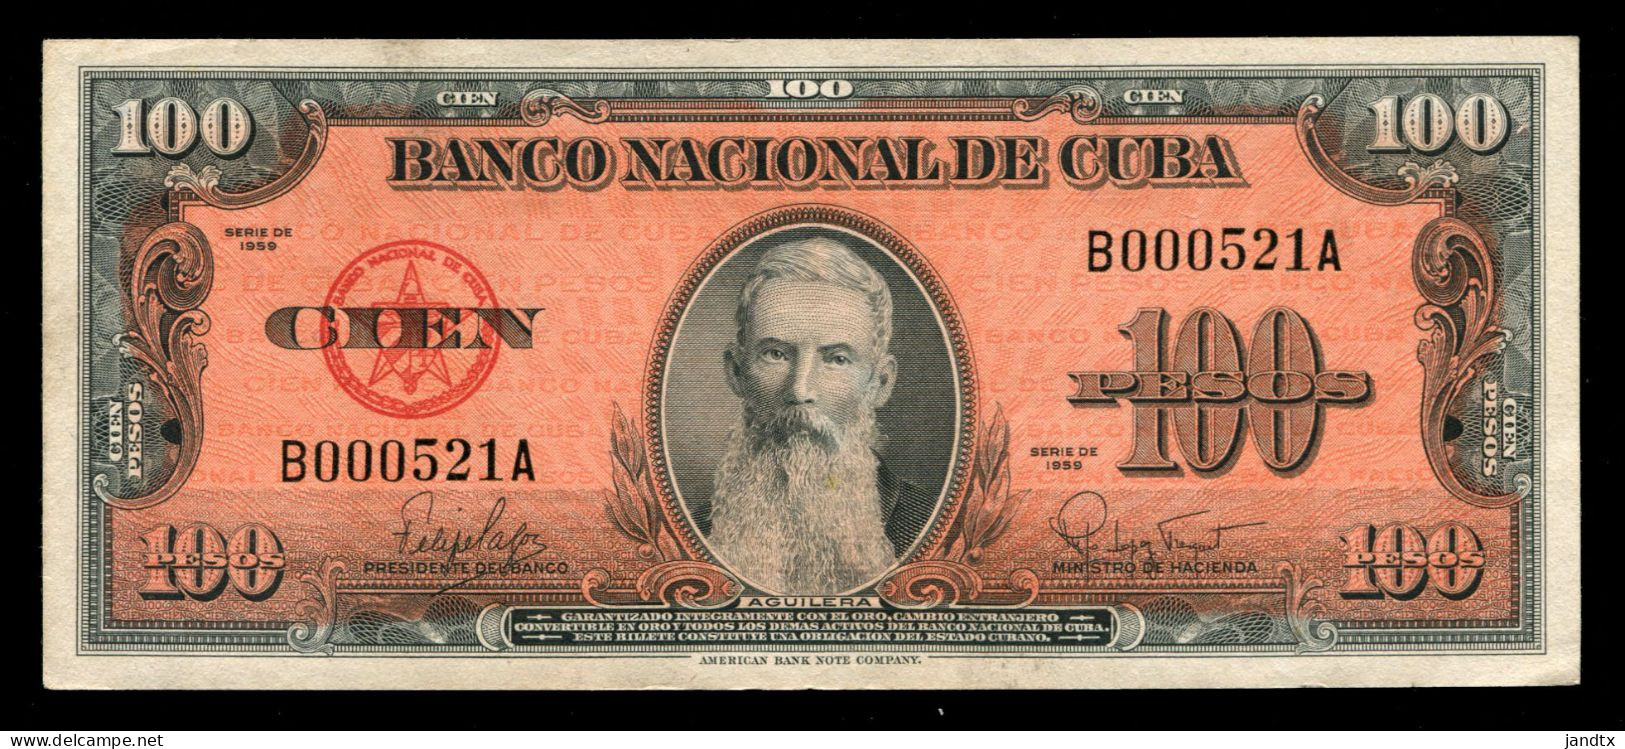 CUBA 100 PESOS 1959 # MUY BAJO UNC SC- - Cuba